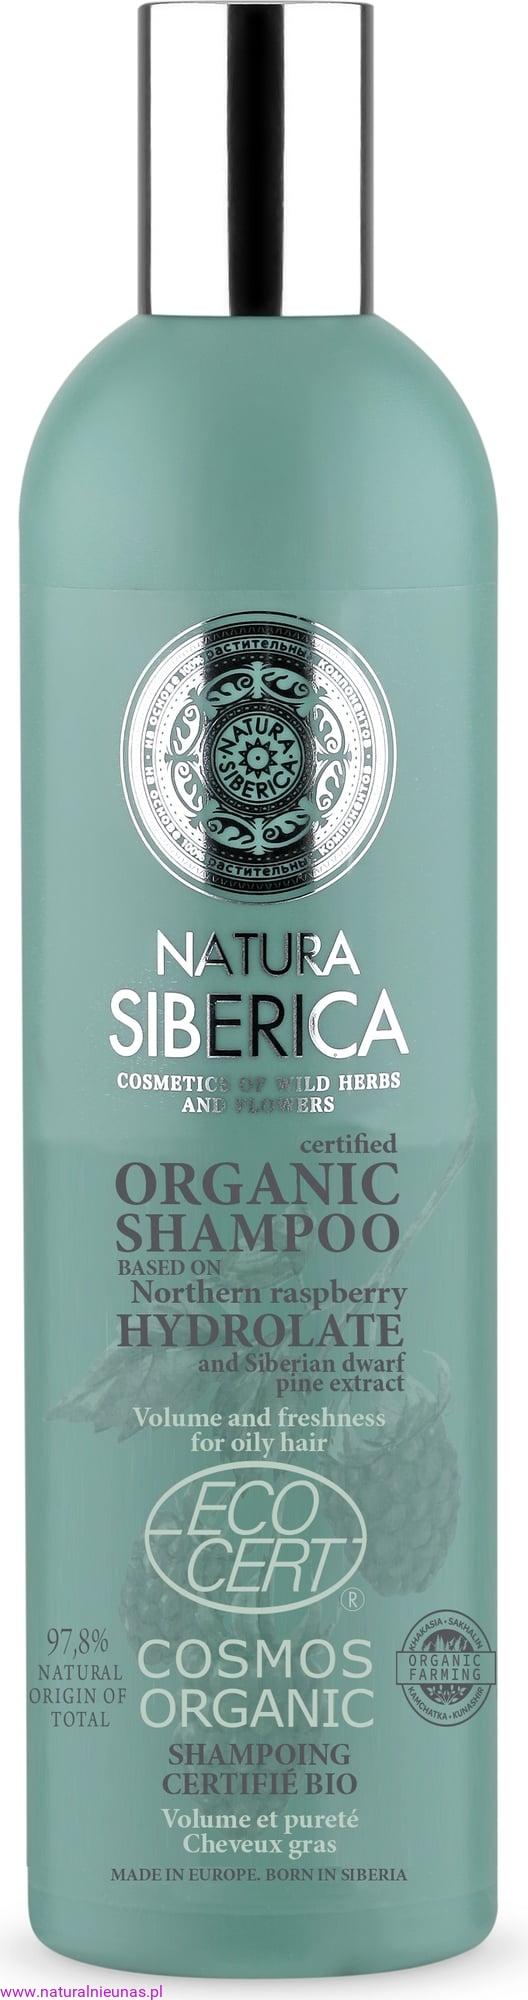 natura siberica szampon objętość i równowaga